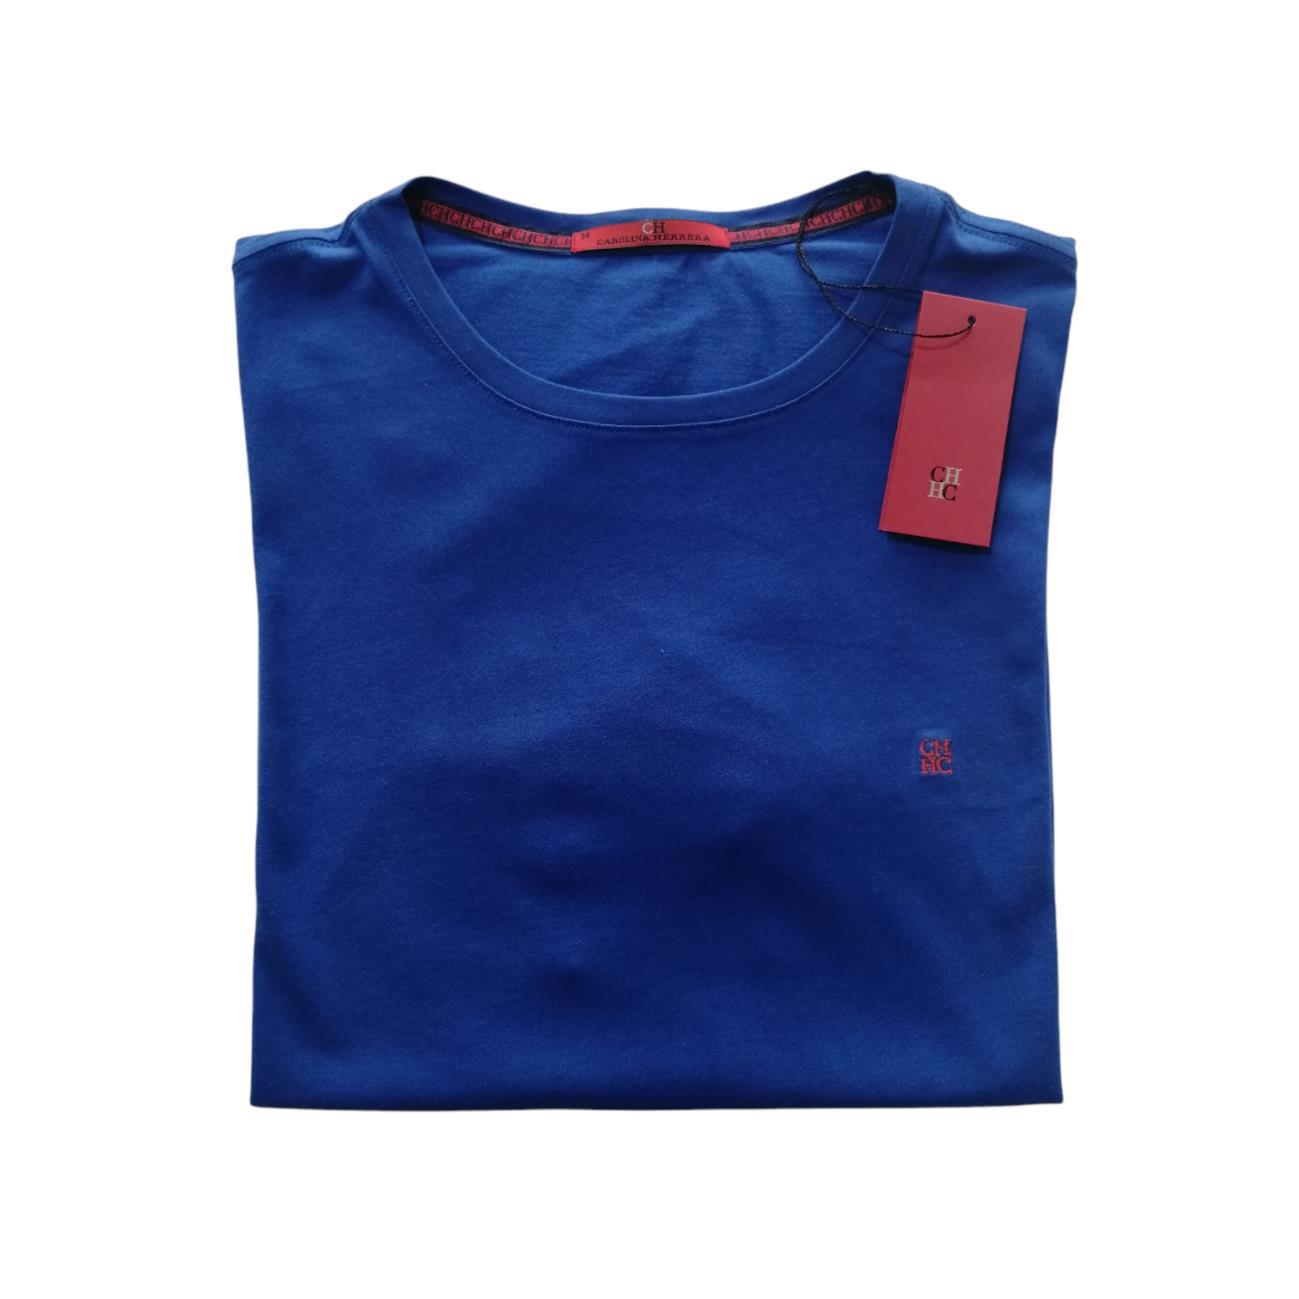 Camiseta cuello redondo manga corta color azul rey Carolina Herrera